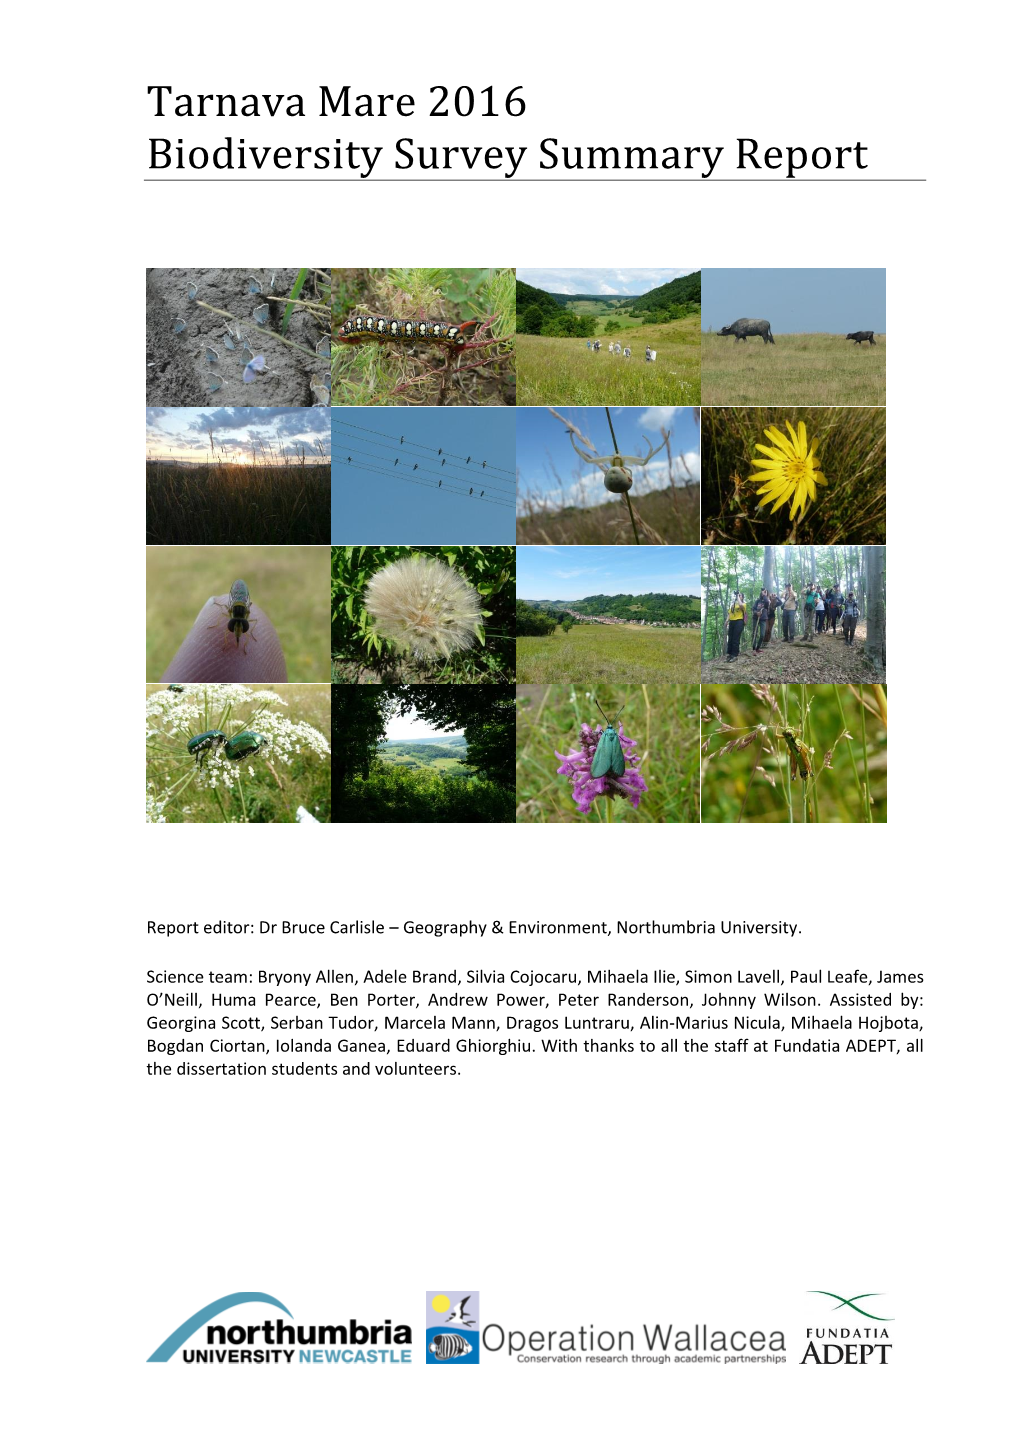 Tarnava Mare 2016 Biodiversity Survey Summary Report